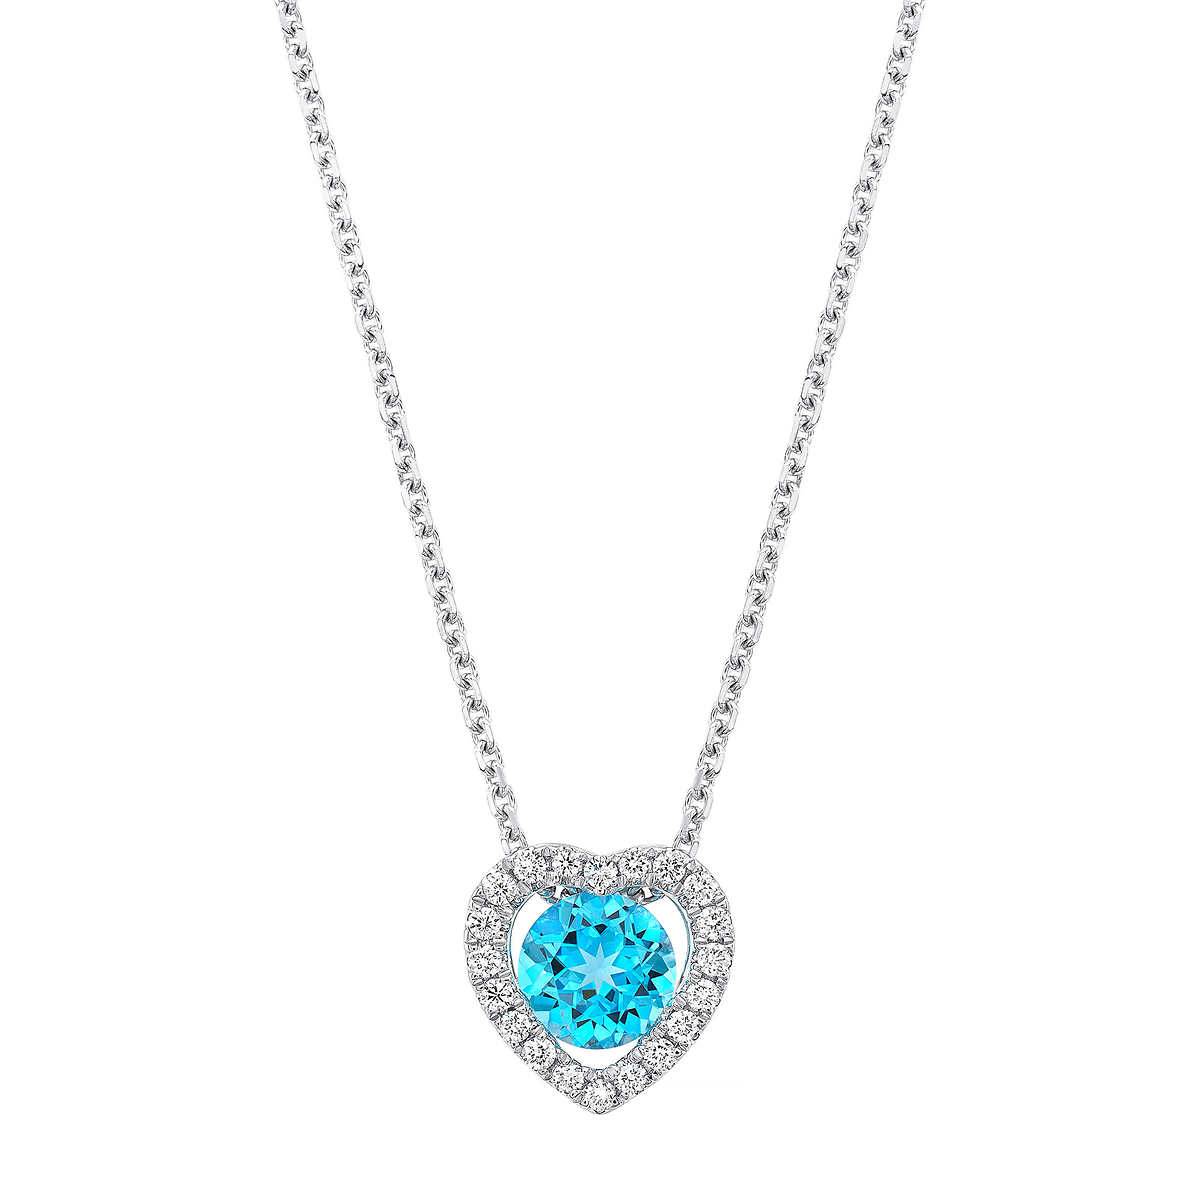 43 Ct Love Heart Women Wedding GIFT Ocean Blue Topaz Gem Silver Necklace Pendant